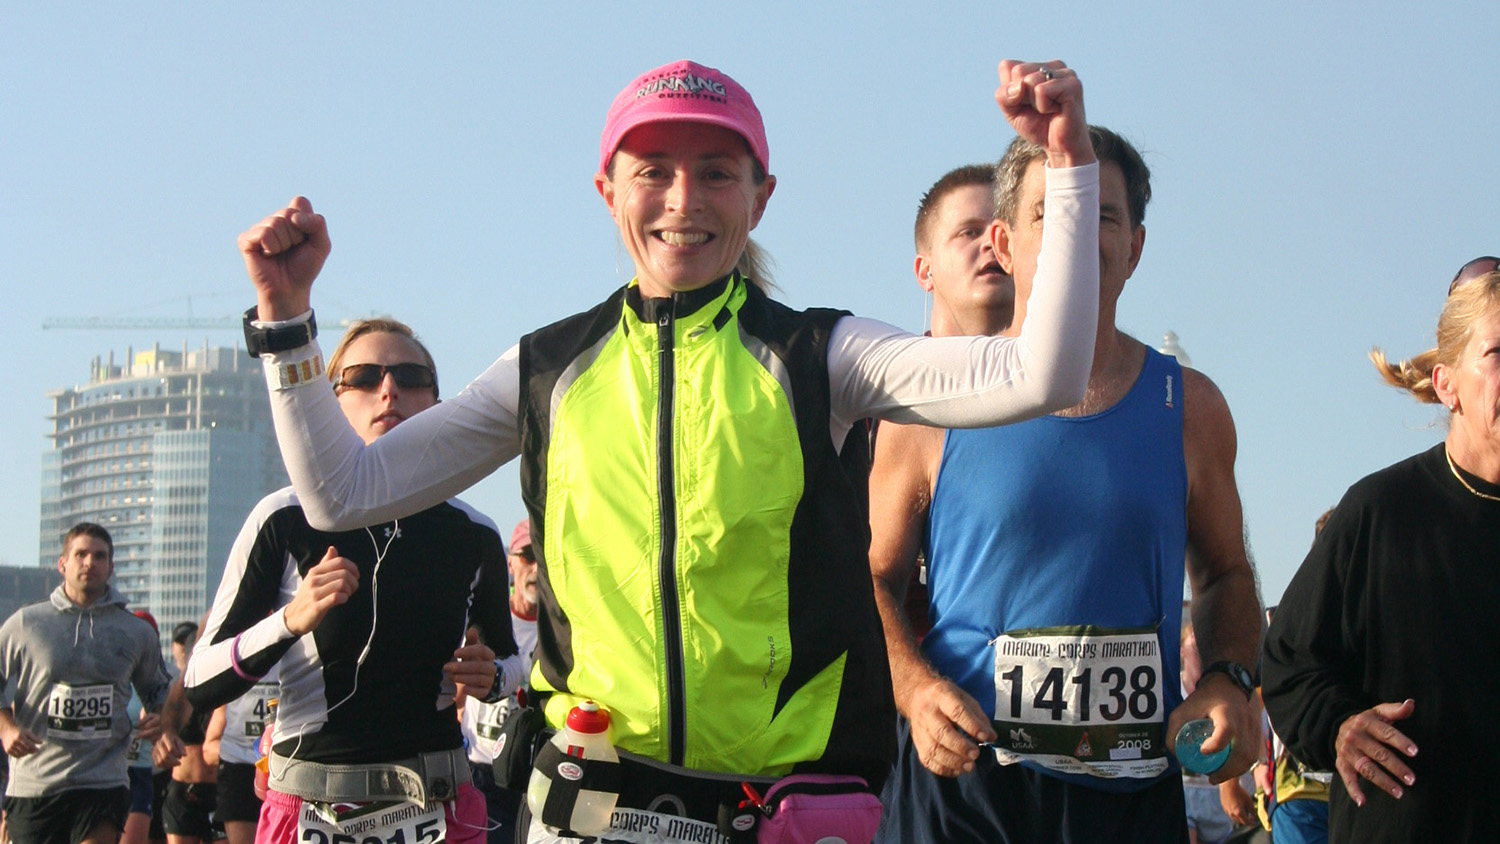 woman wearing yellow vest running in marathon